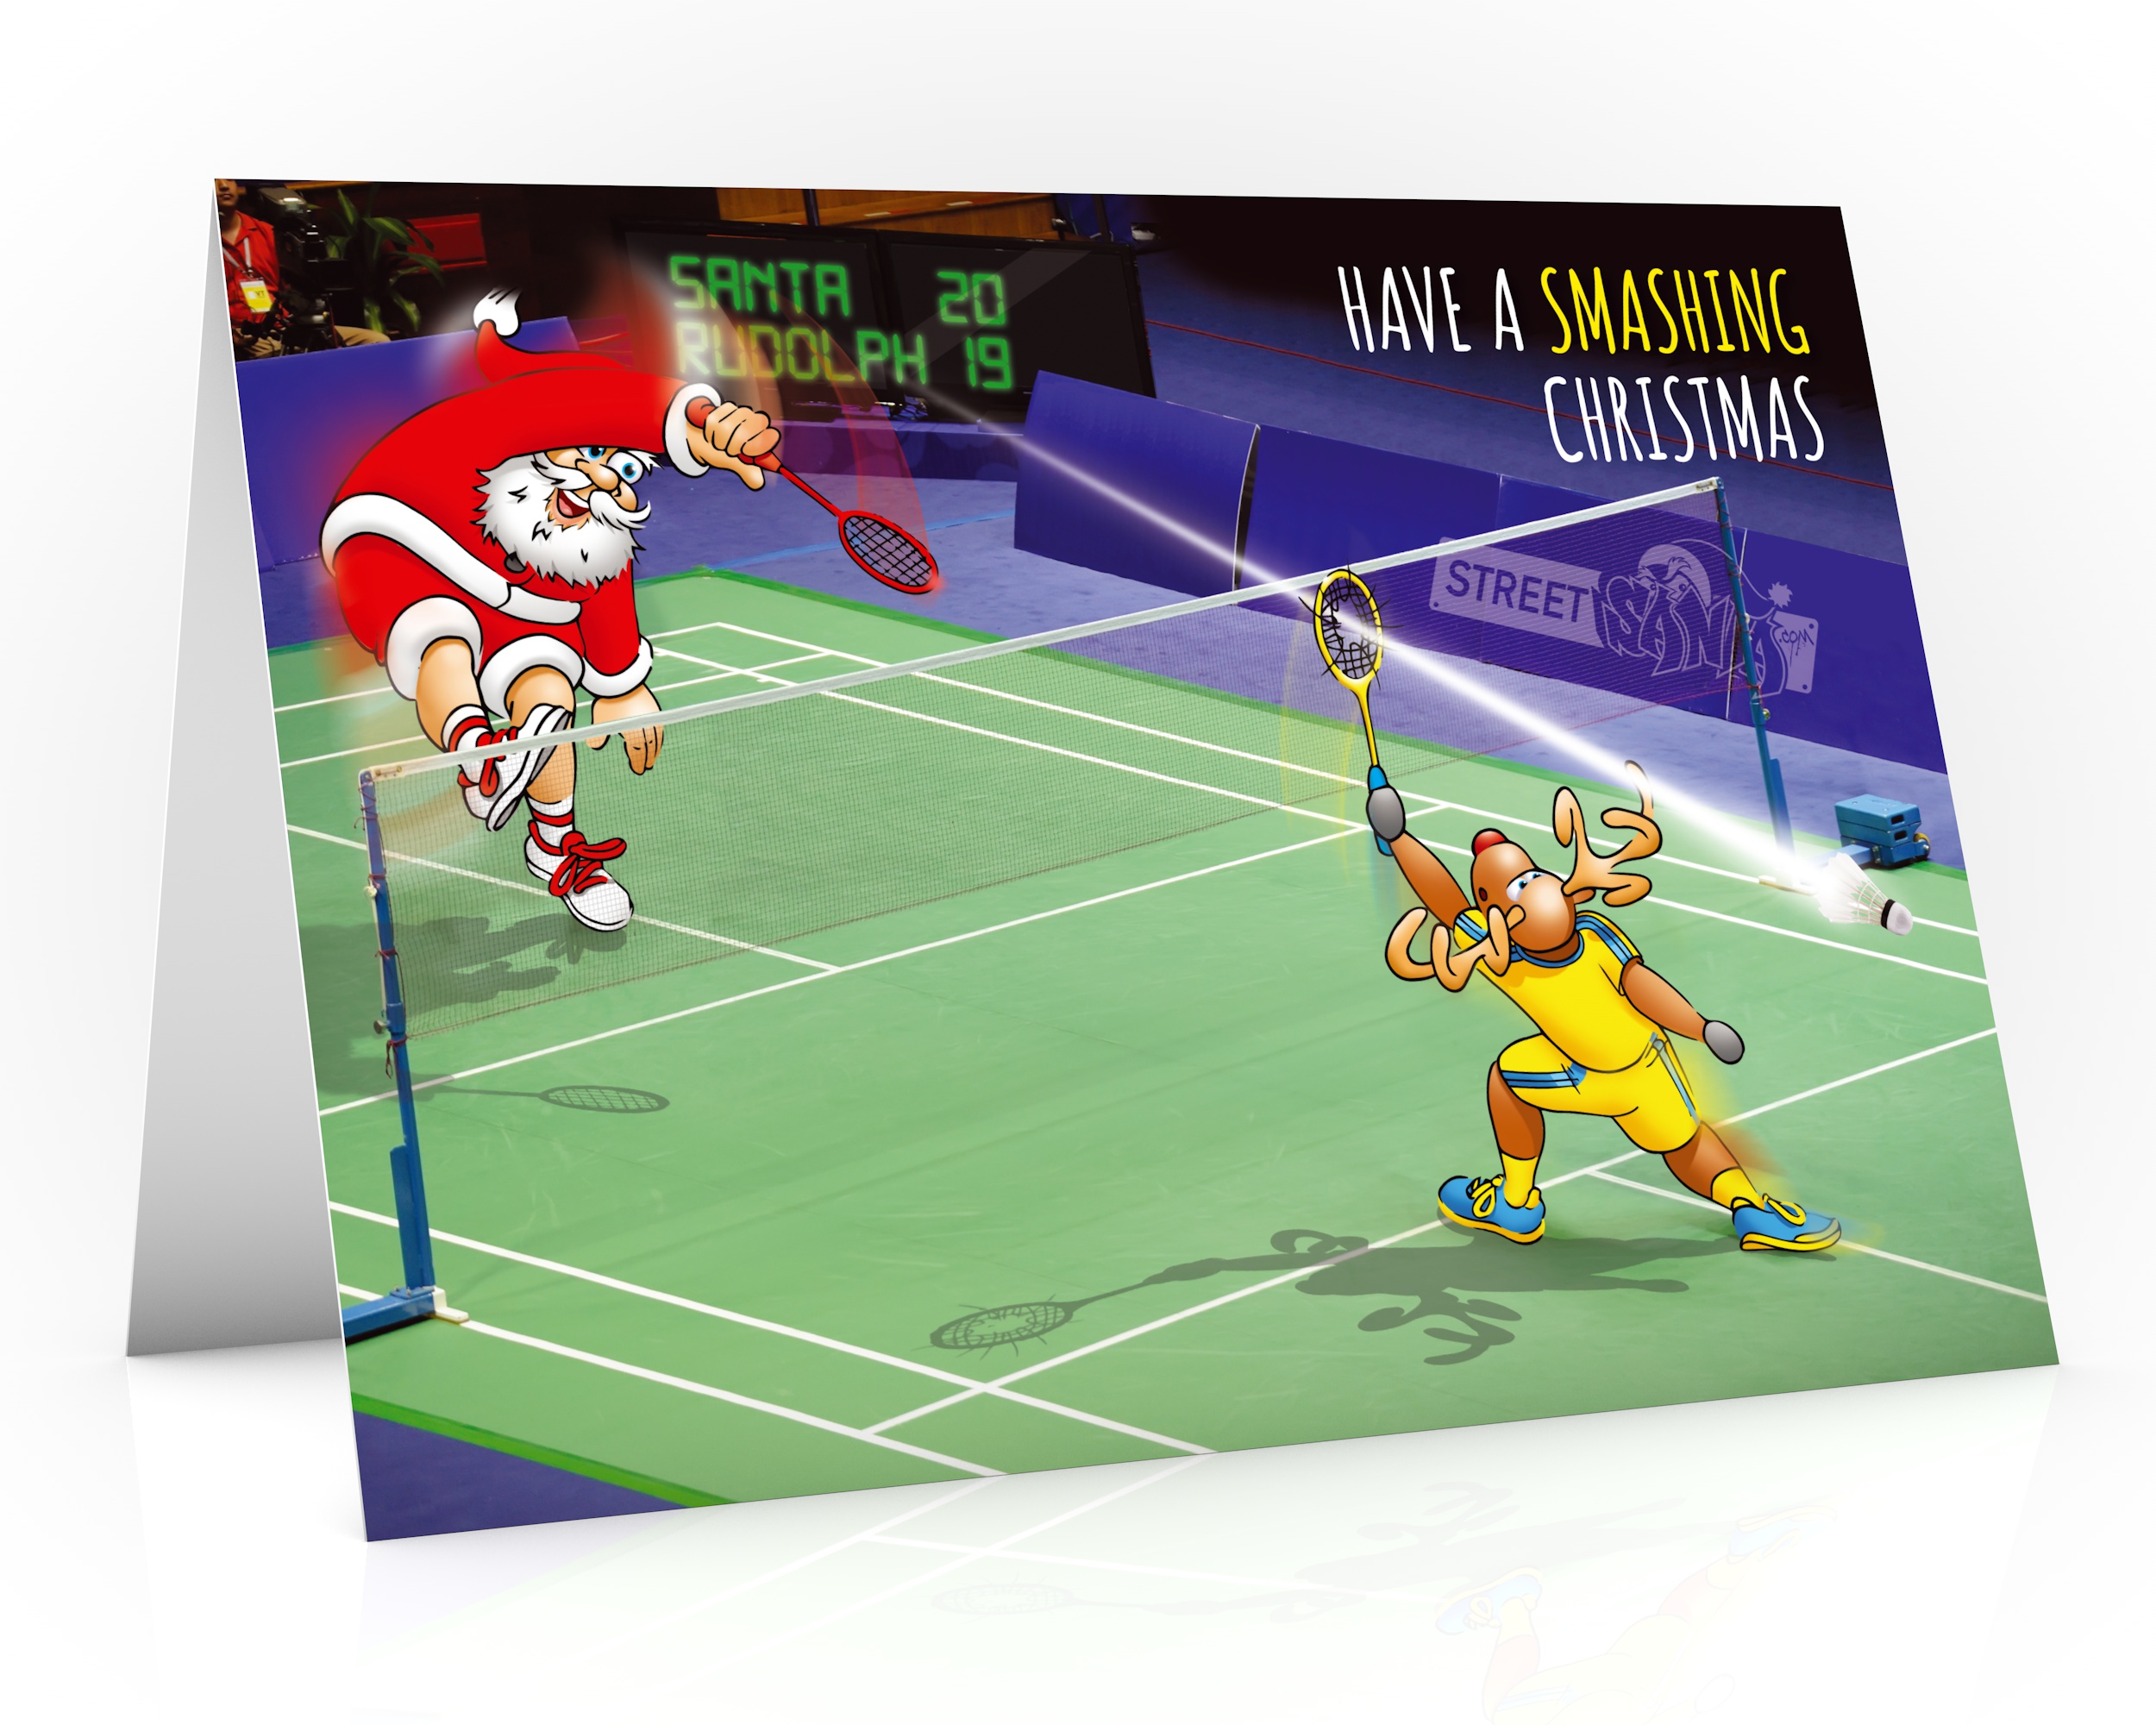 Badminton Christmas card | Have a smashing Christmas - STREET SANTA